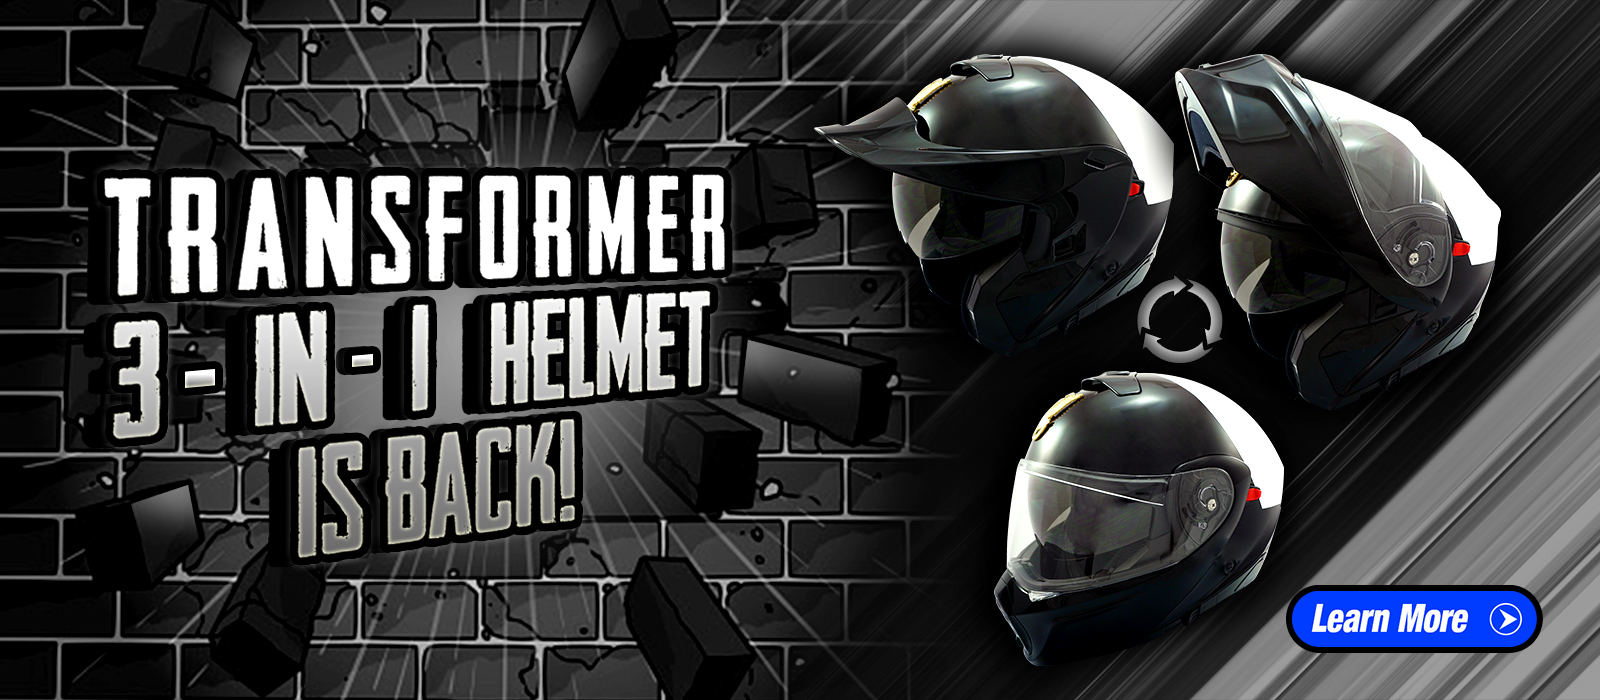 3-in-1 Transformer Helmet